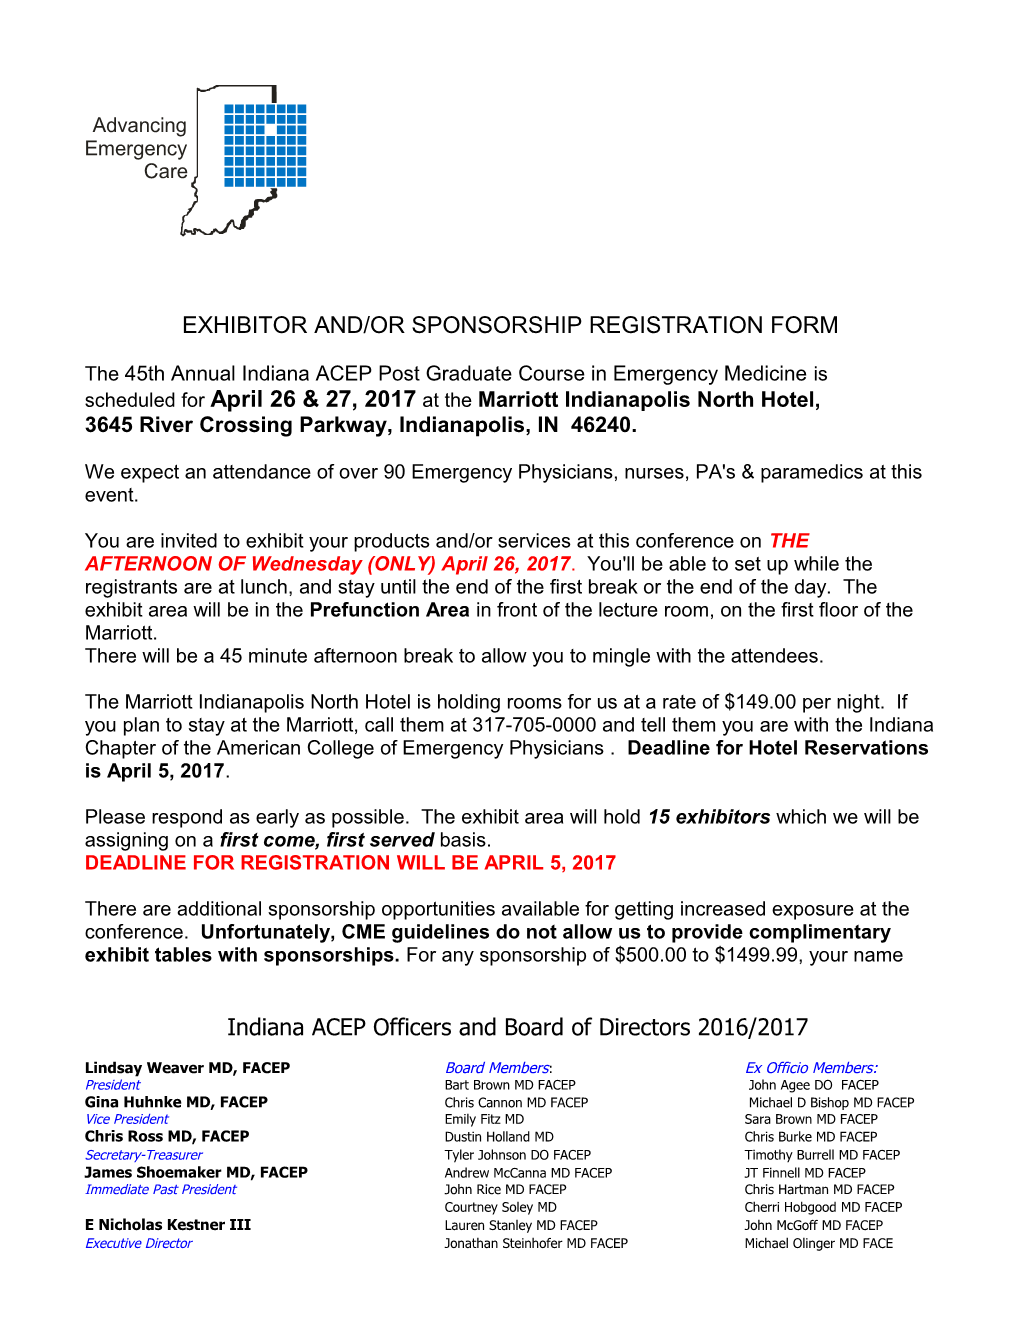 Exhibitor And/Or Sponsorship Registration Form